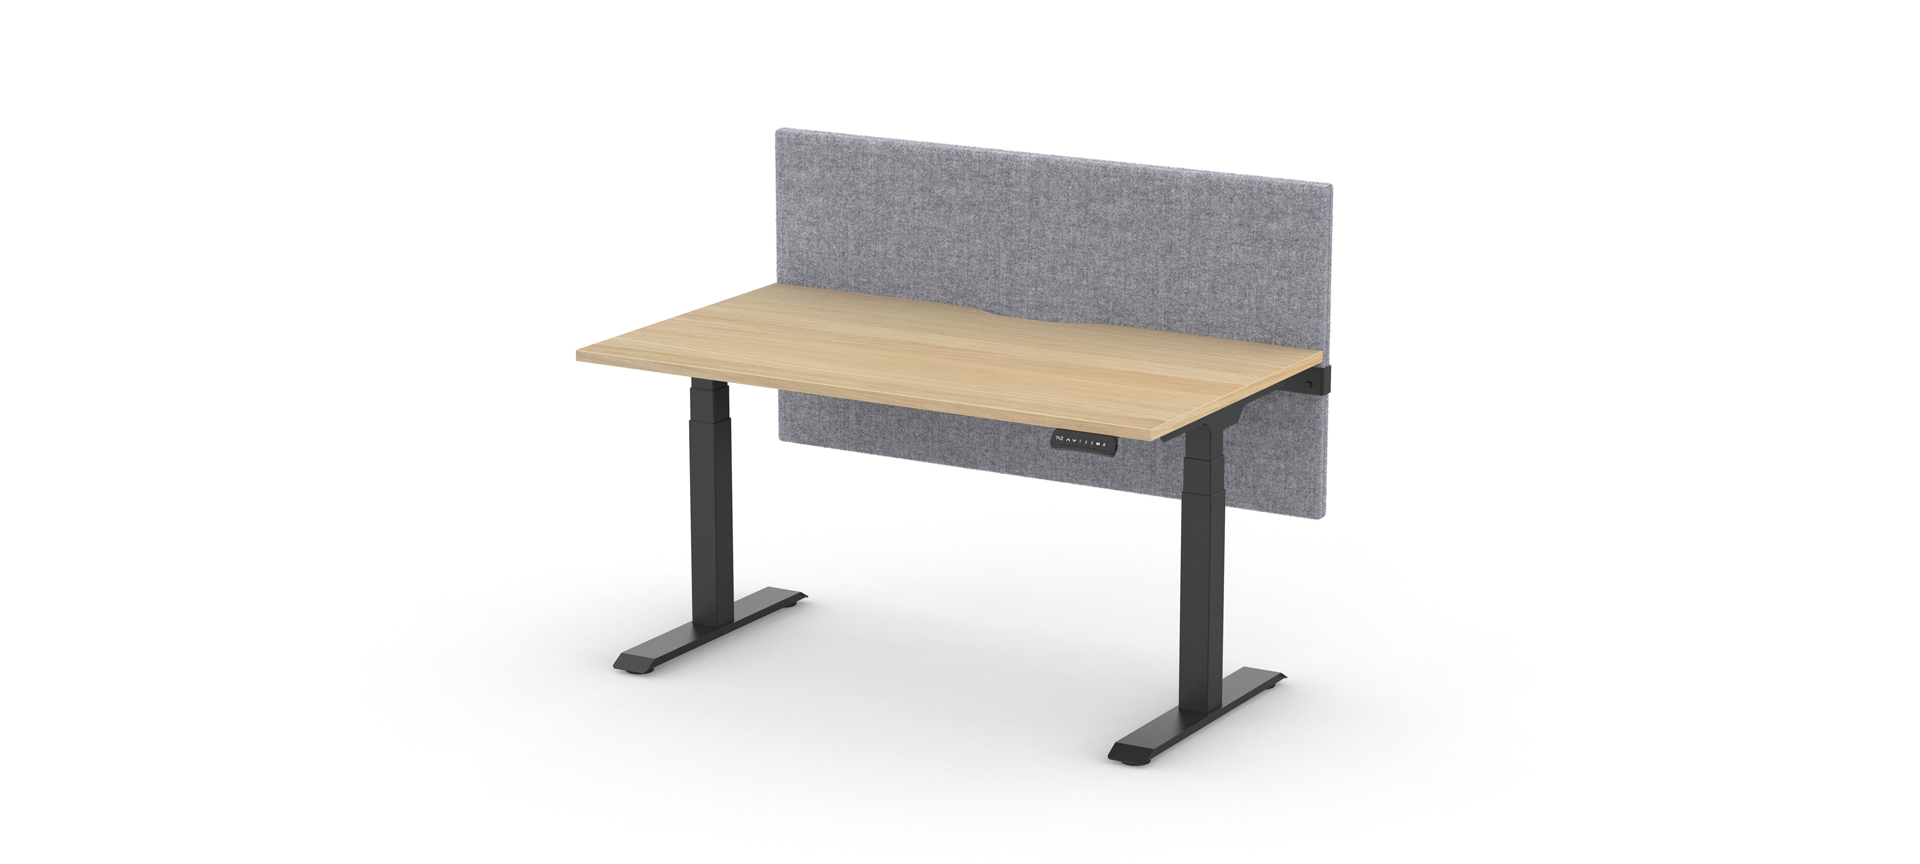 Formetiq Alto 2 sit-stand height adjustable desk